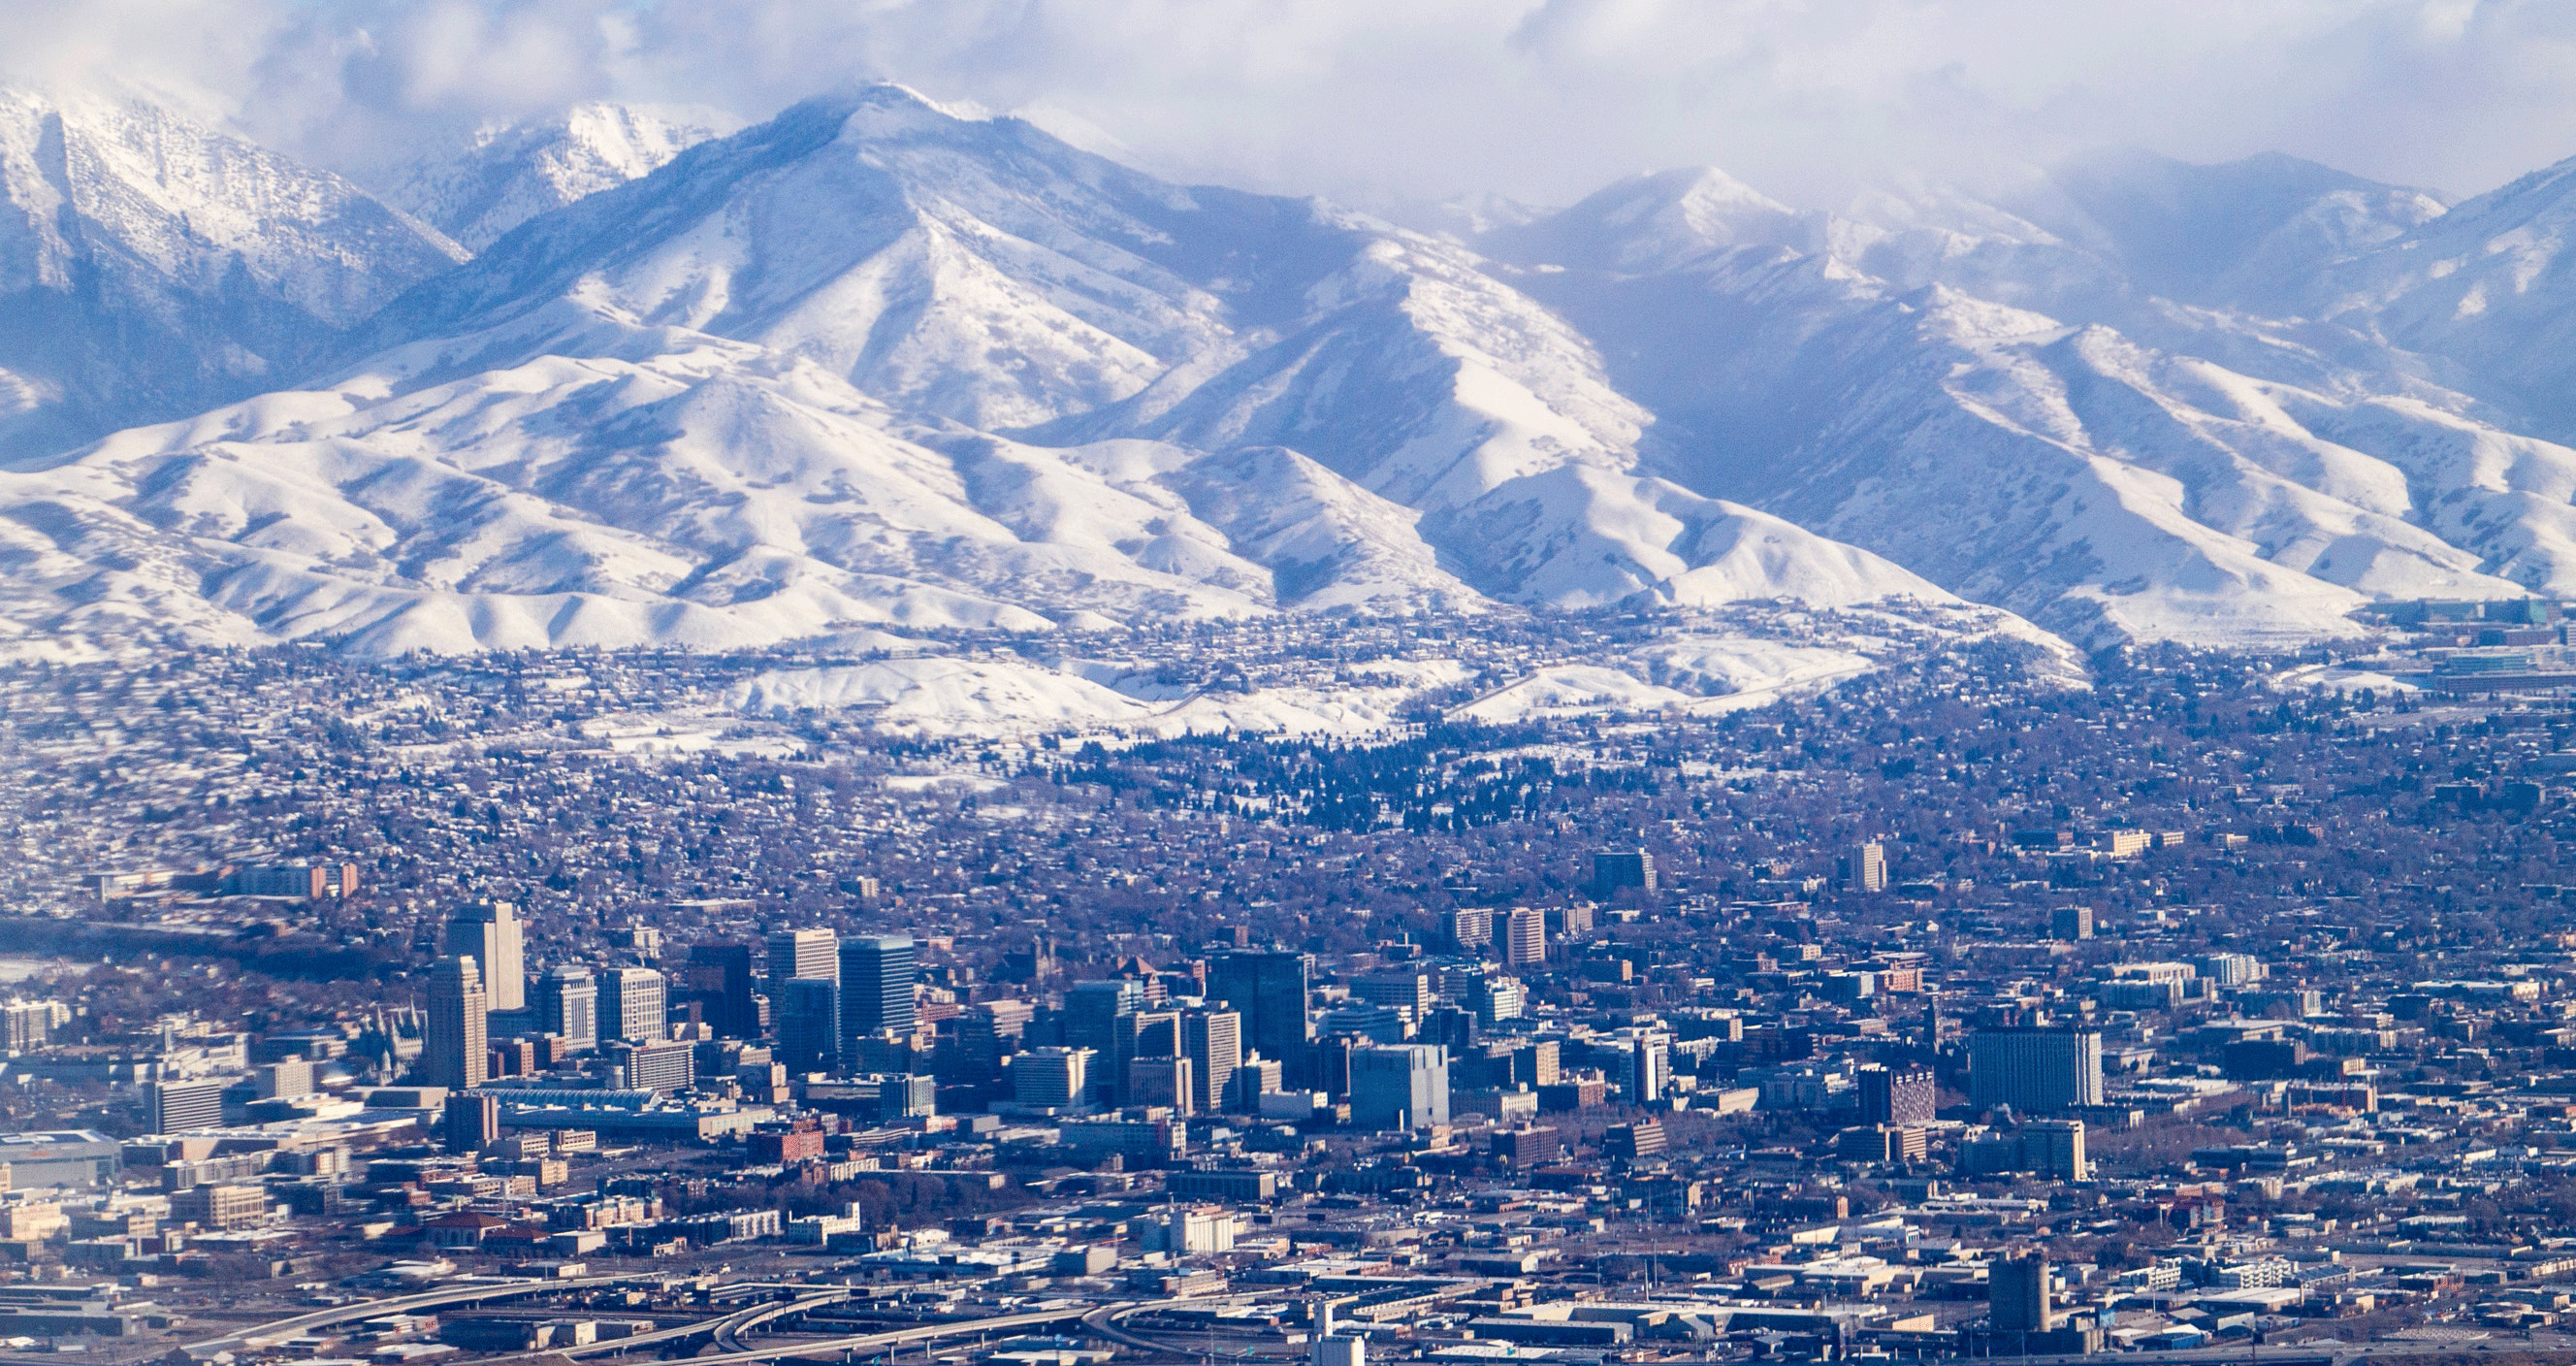 Snowy mountain near city